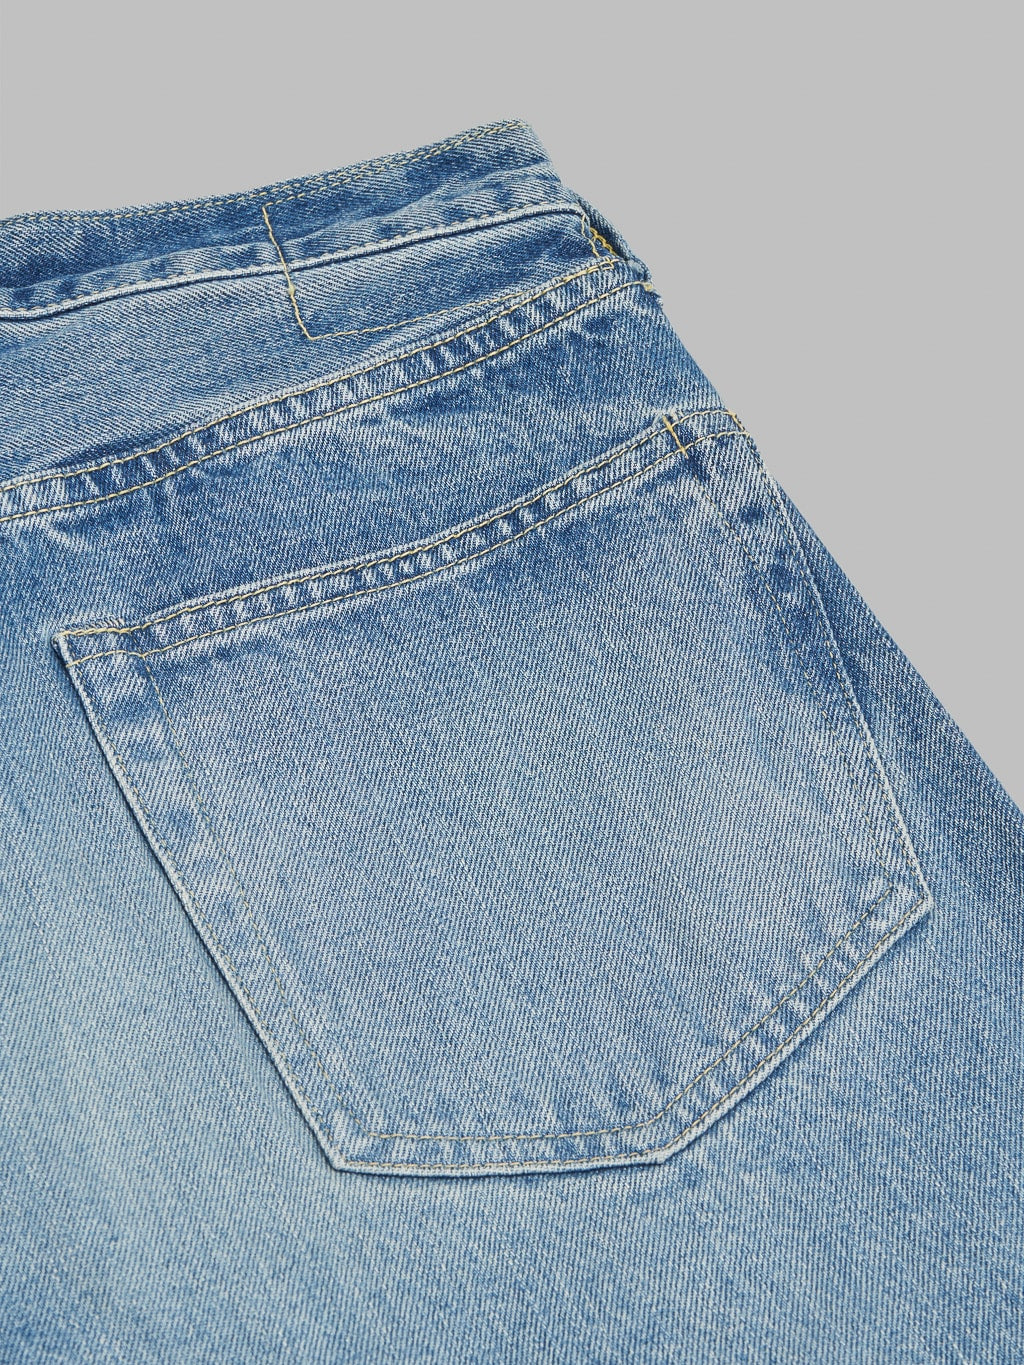 Sugar Cane 2021SW Model Stonewashed Slim Tapered selvedge Jeans pocket closeup